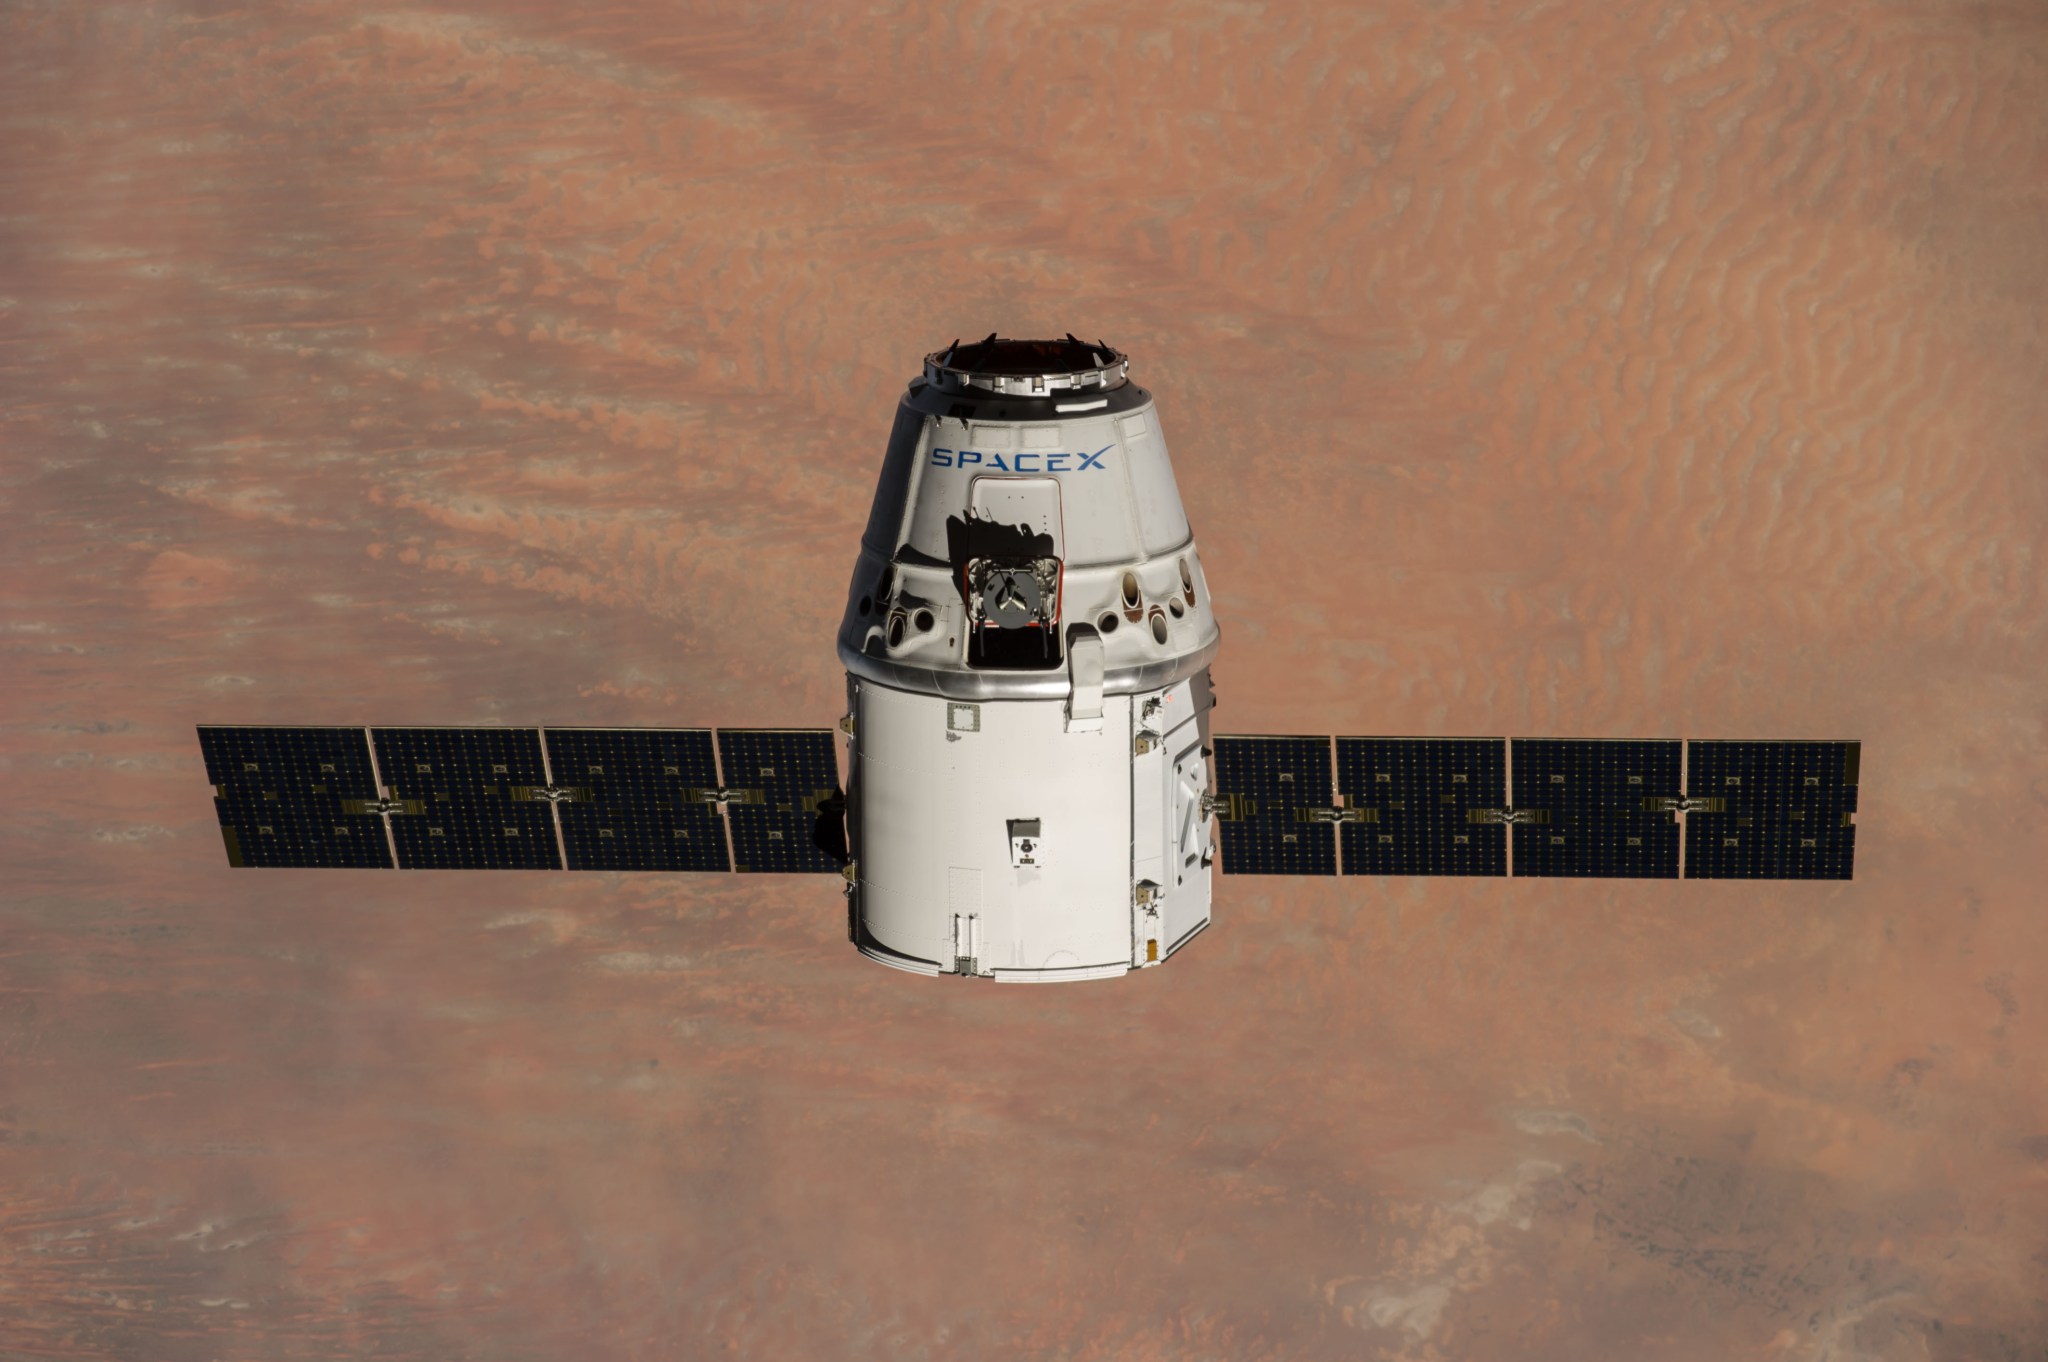 SpaceX's Dragon cargo spacecraft